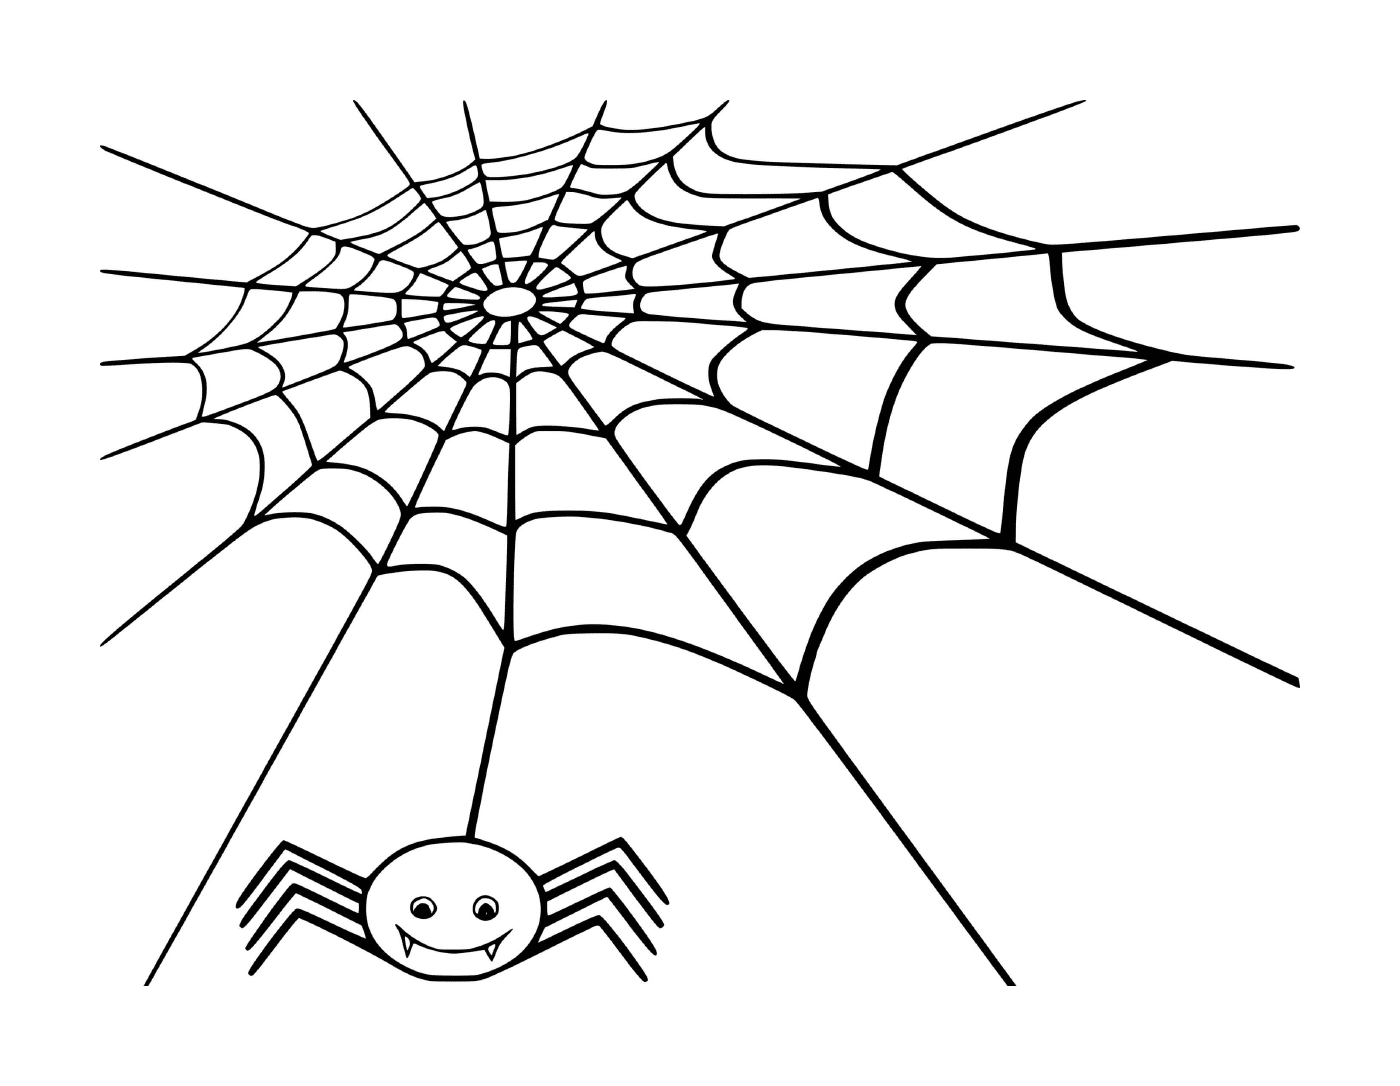  A spider's web where a spider awaits its prey 